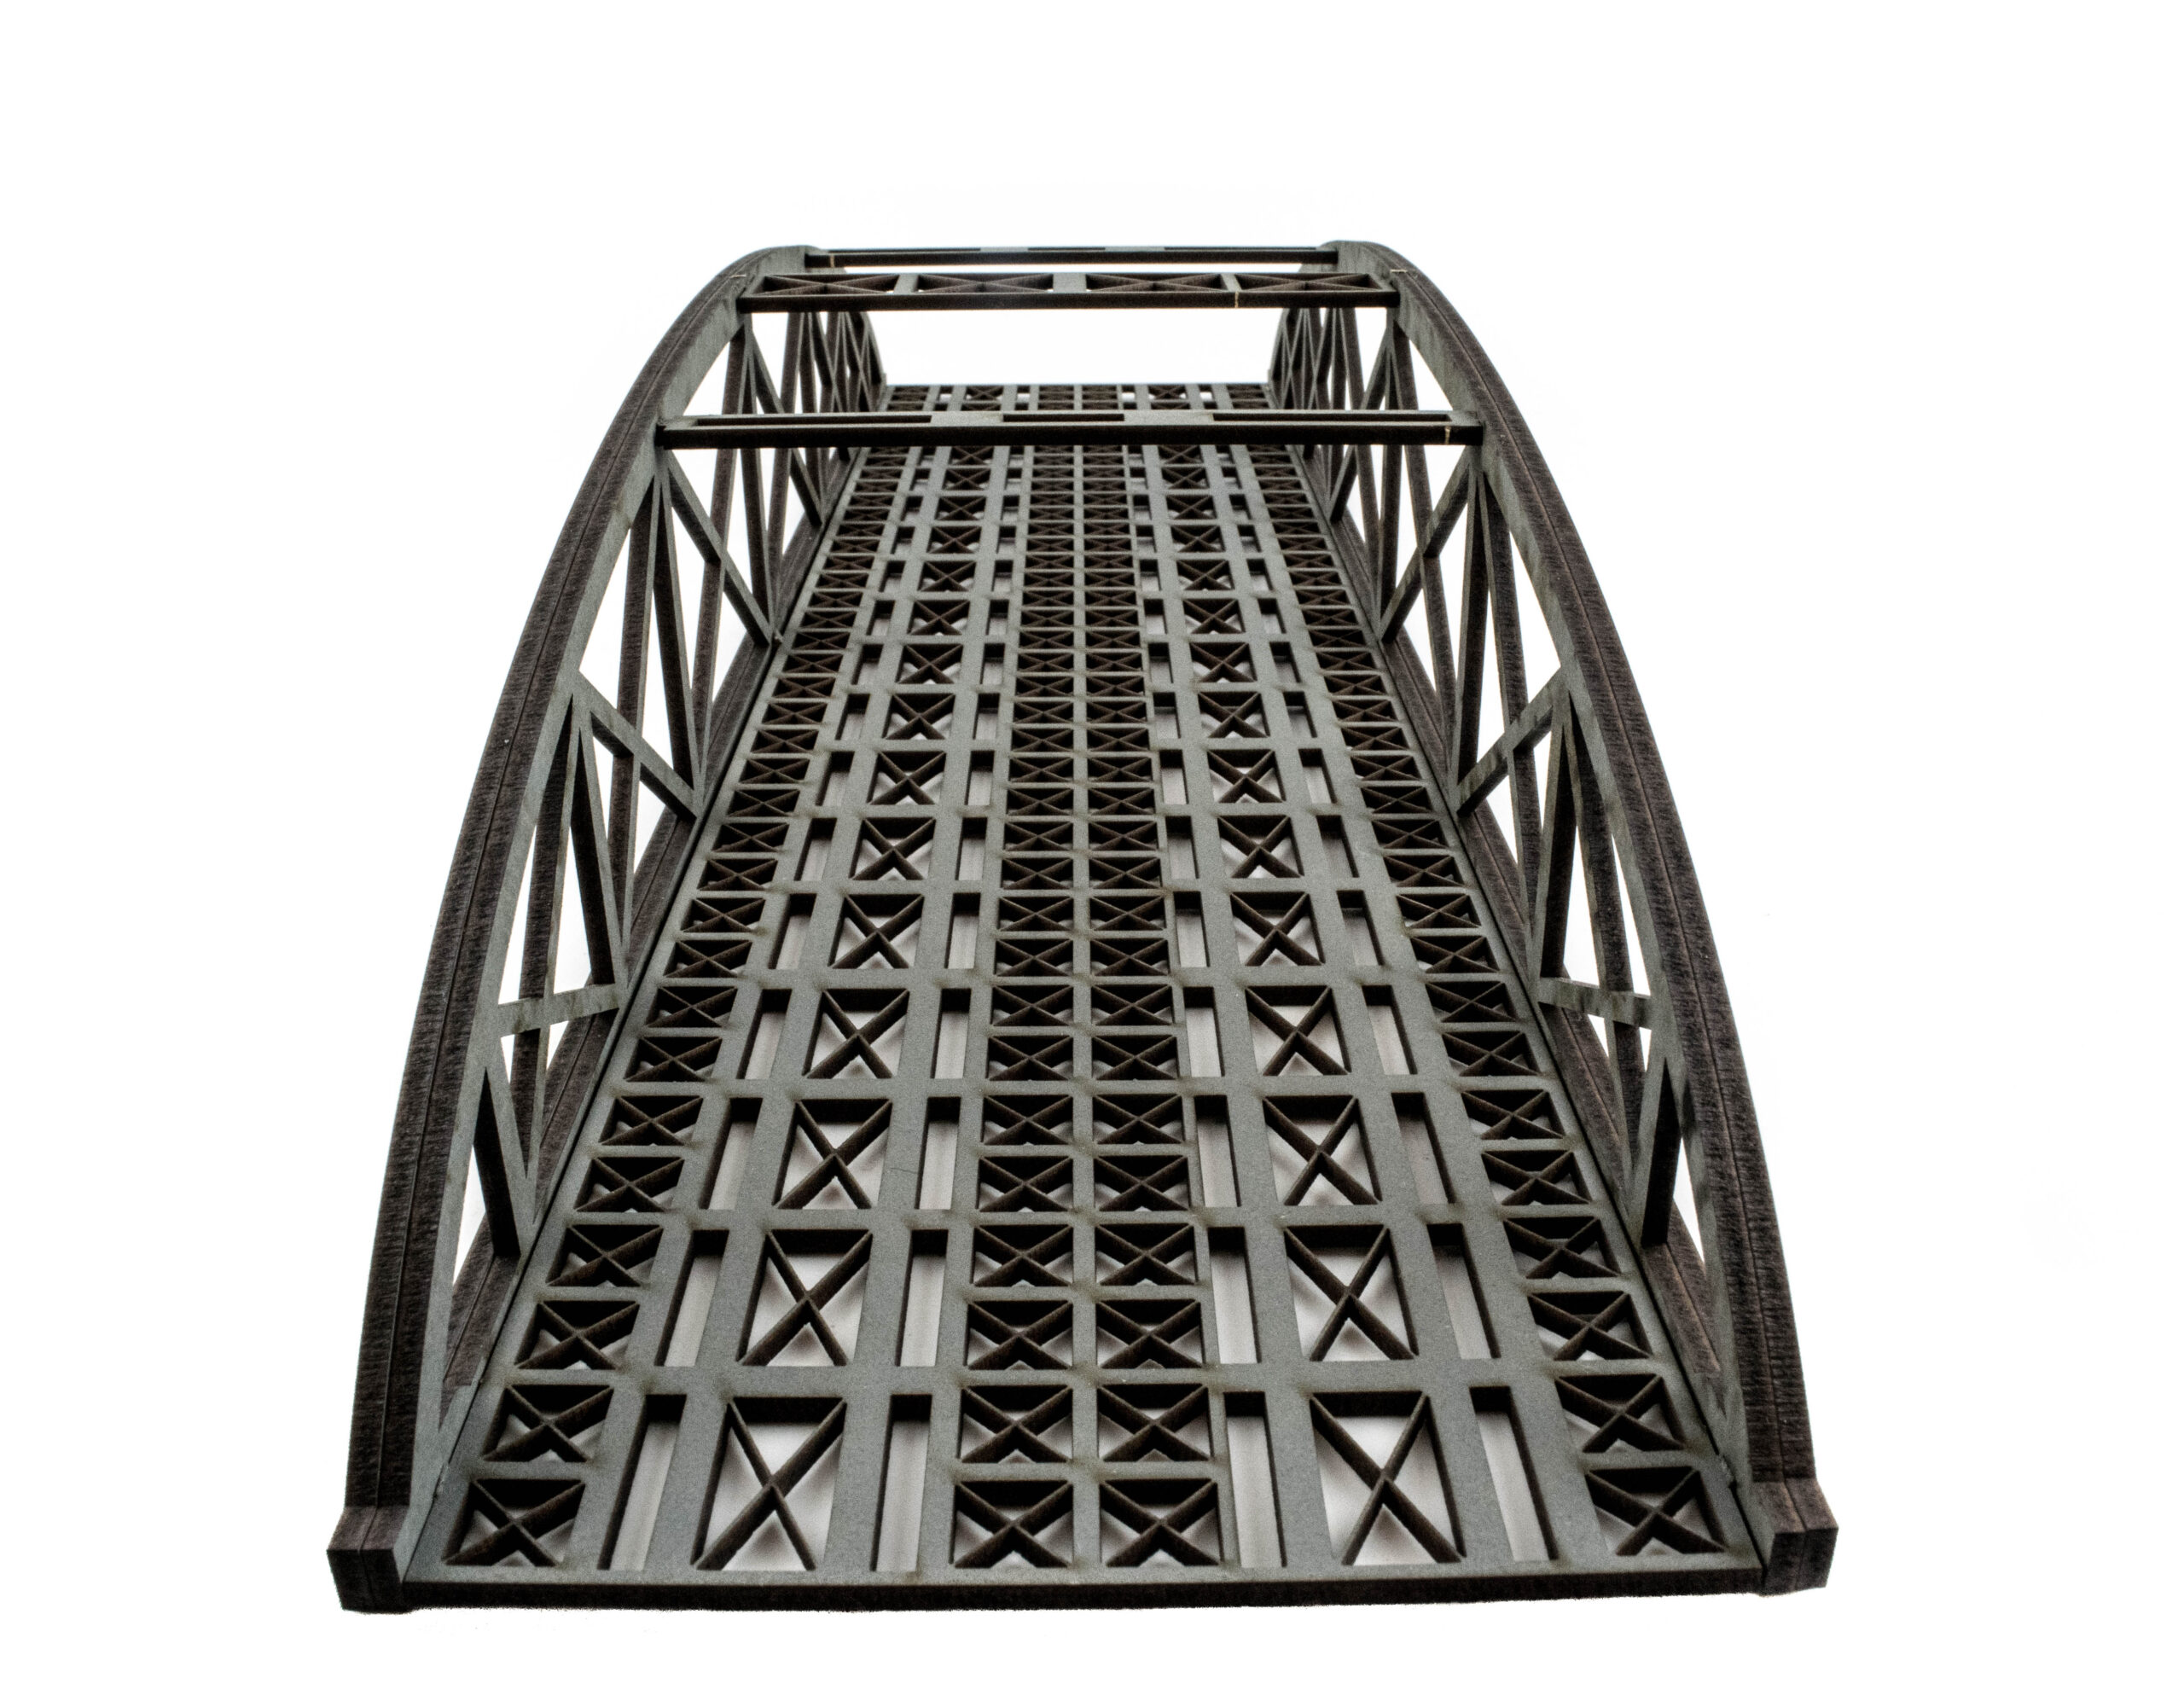 WW Scenics Double Track Bowstring Grey Bridge 560 mm D016